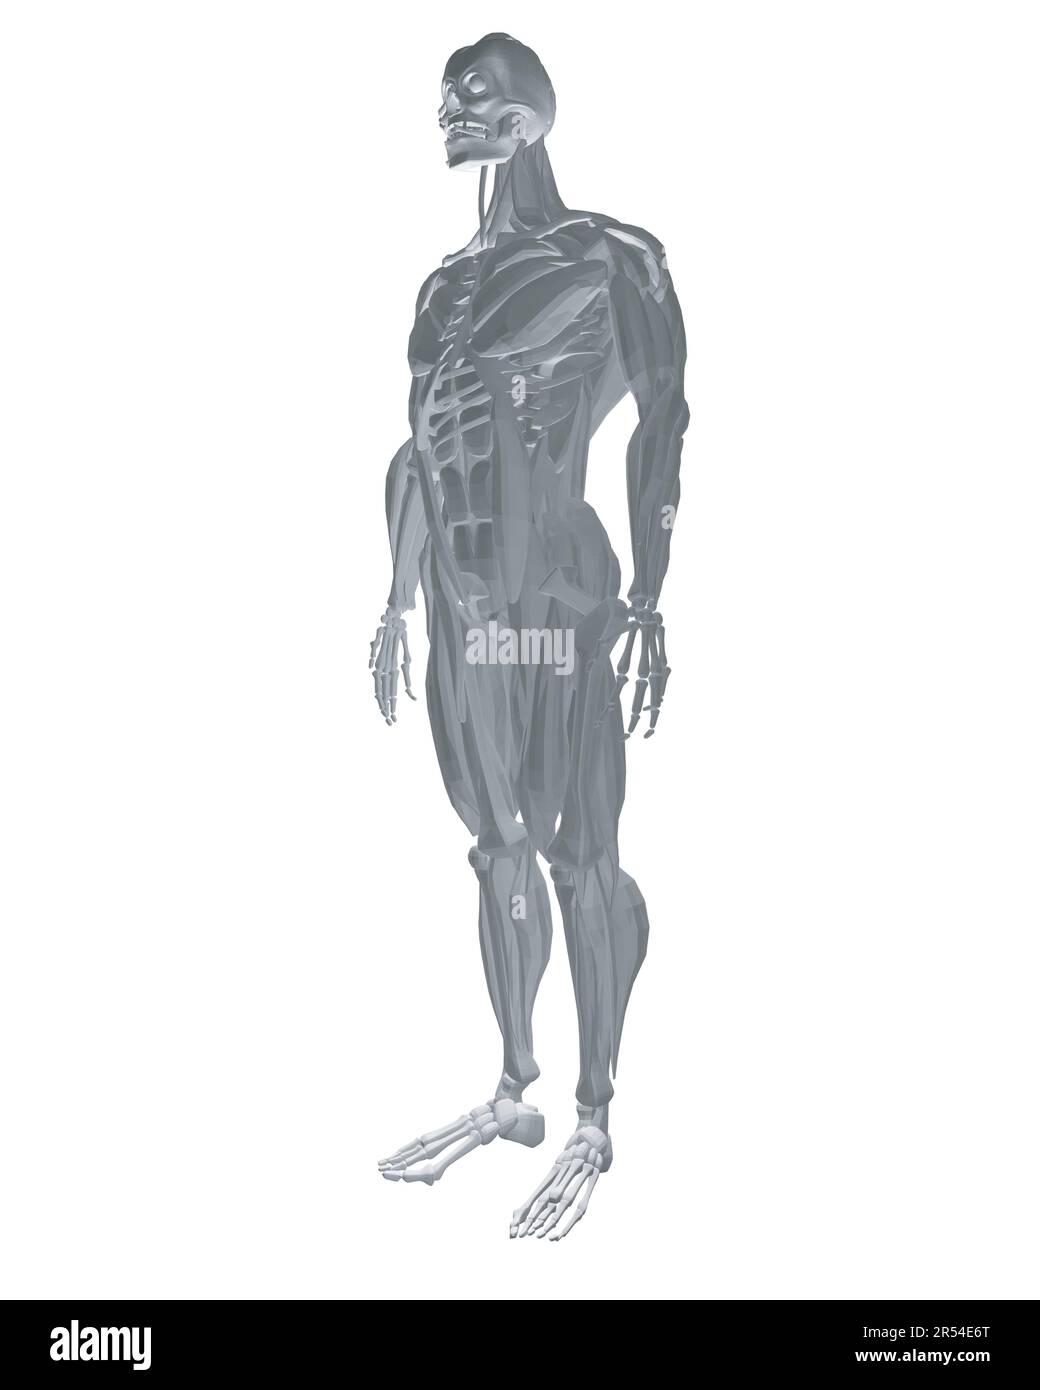 Human anatomy. Male body muscular system model. Anatomy of male muscular system - posterior and anterior view - full body. Polygonal body of man. 3D. Stock Vector